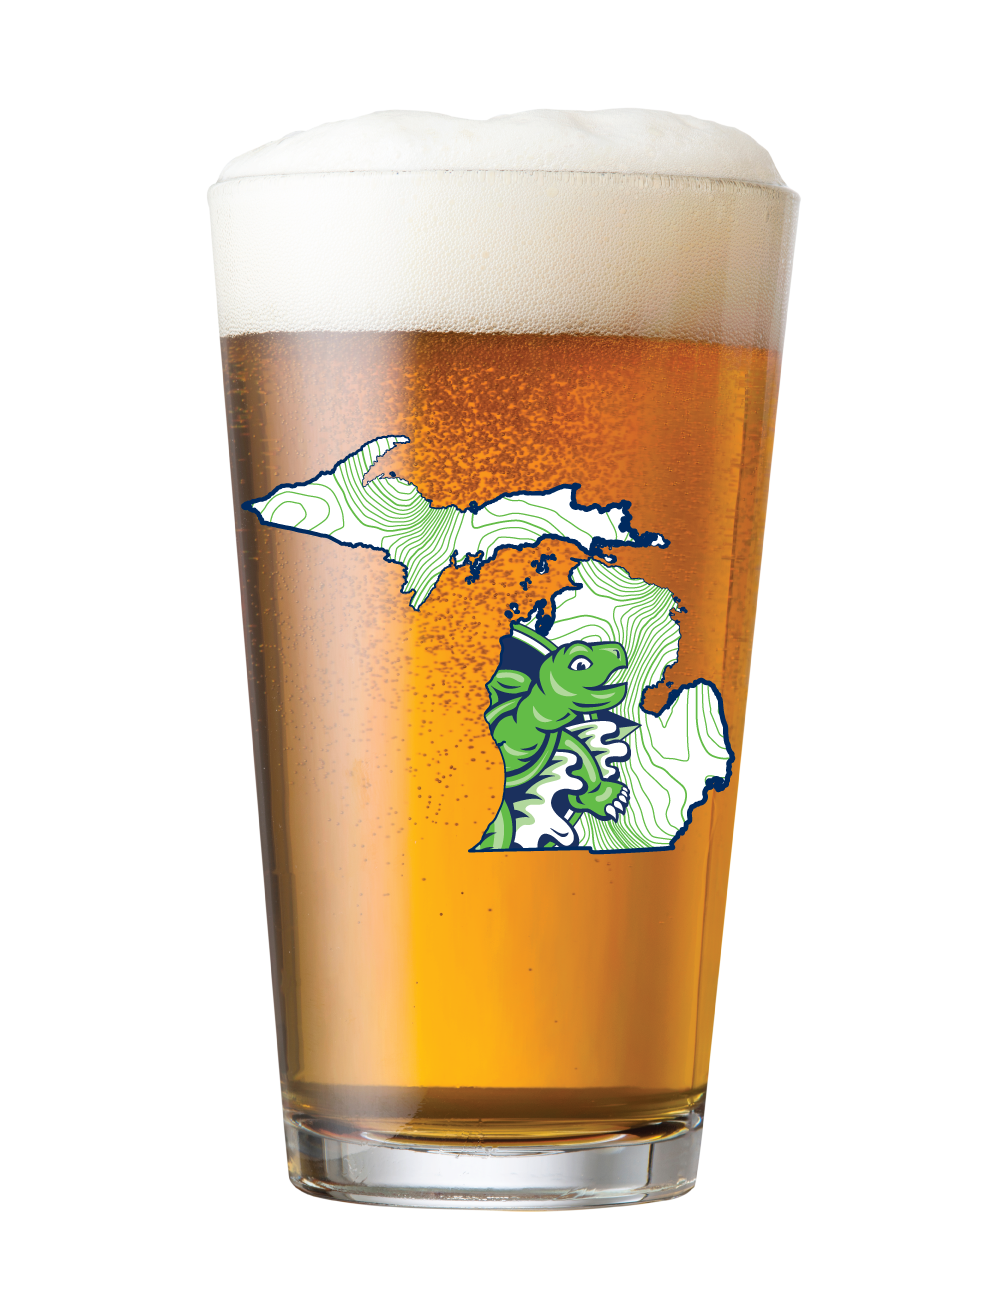 Terrapin State Glassware – Terrapin Beer Co.